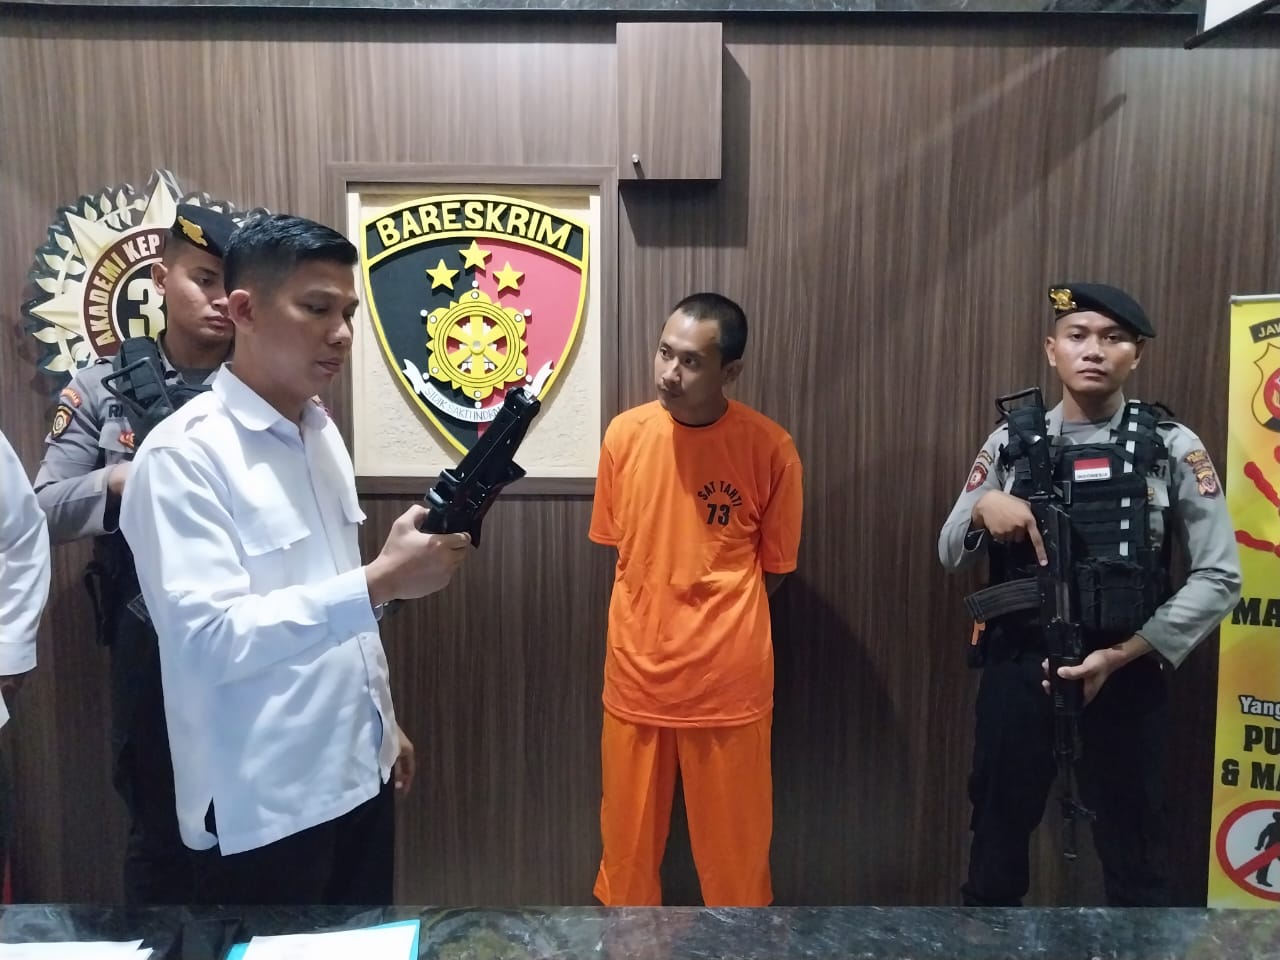 OH TERNYATA! Bang Jago Pelaku Pemukulan di Gronggong Cirebon Residivis, Pernah Dihukum 1,5 Tahun Penjara